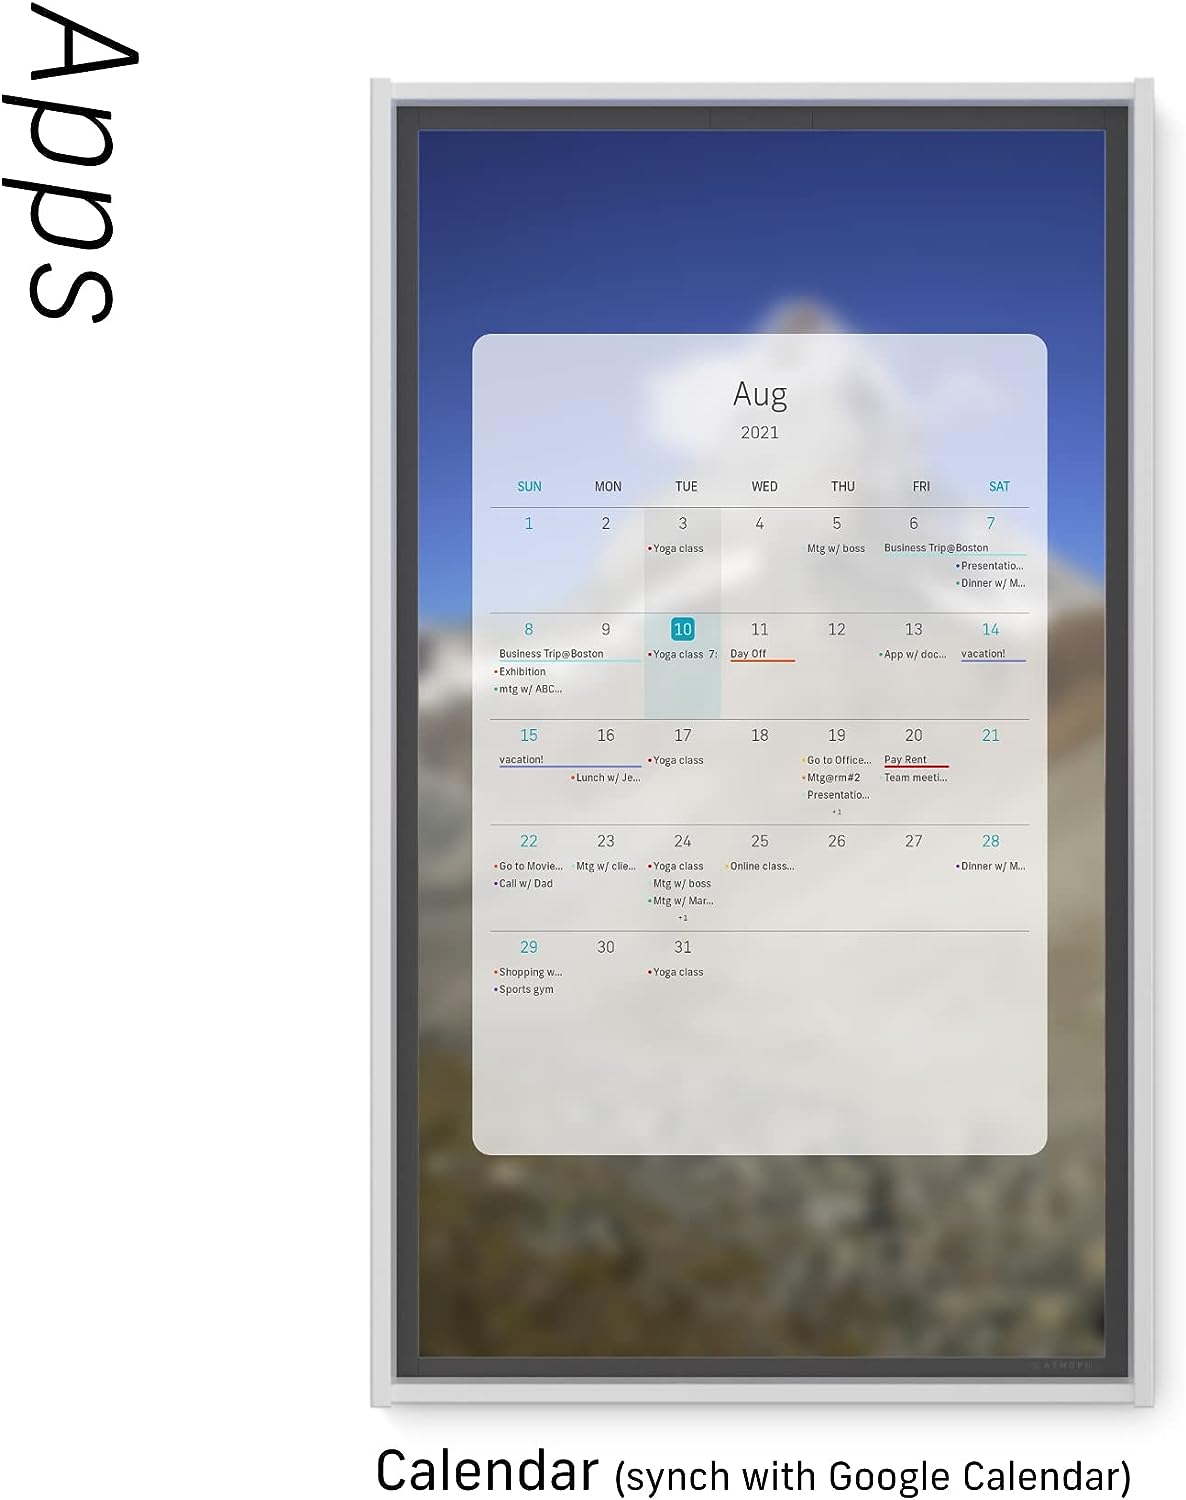 Atmoph Window 2 [Basic] (White) - Smart Display with 1,500+ 4K/6K Original Views